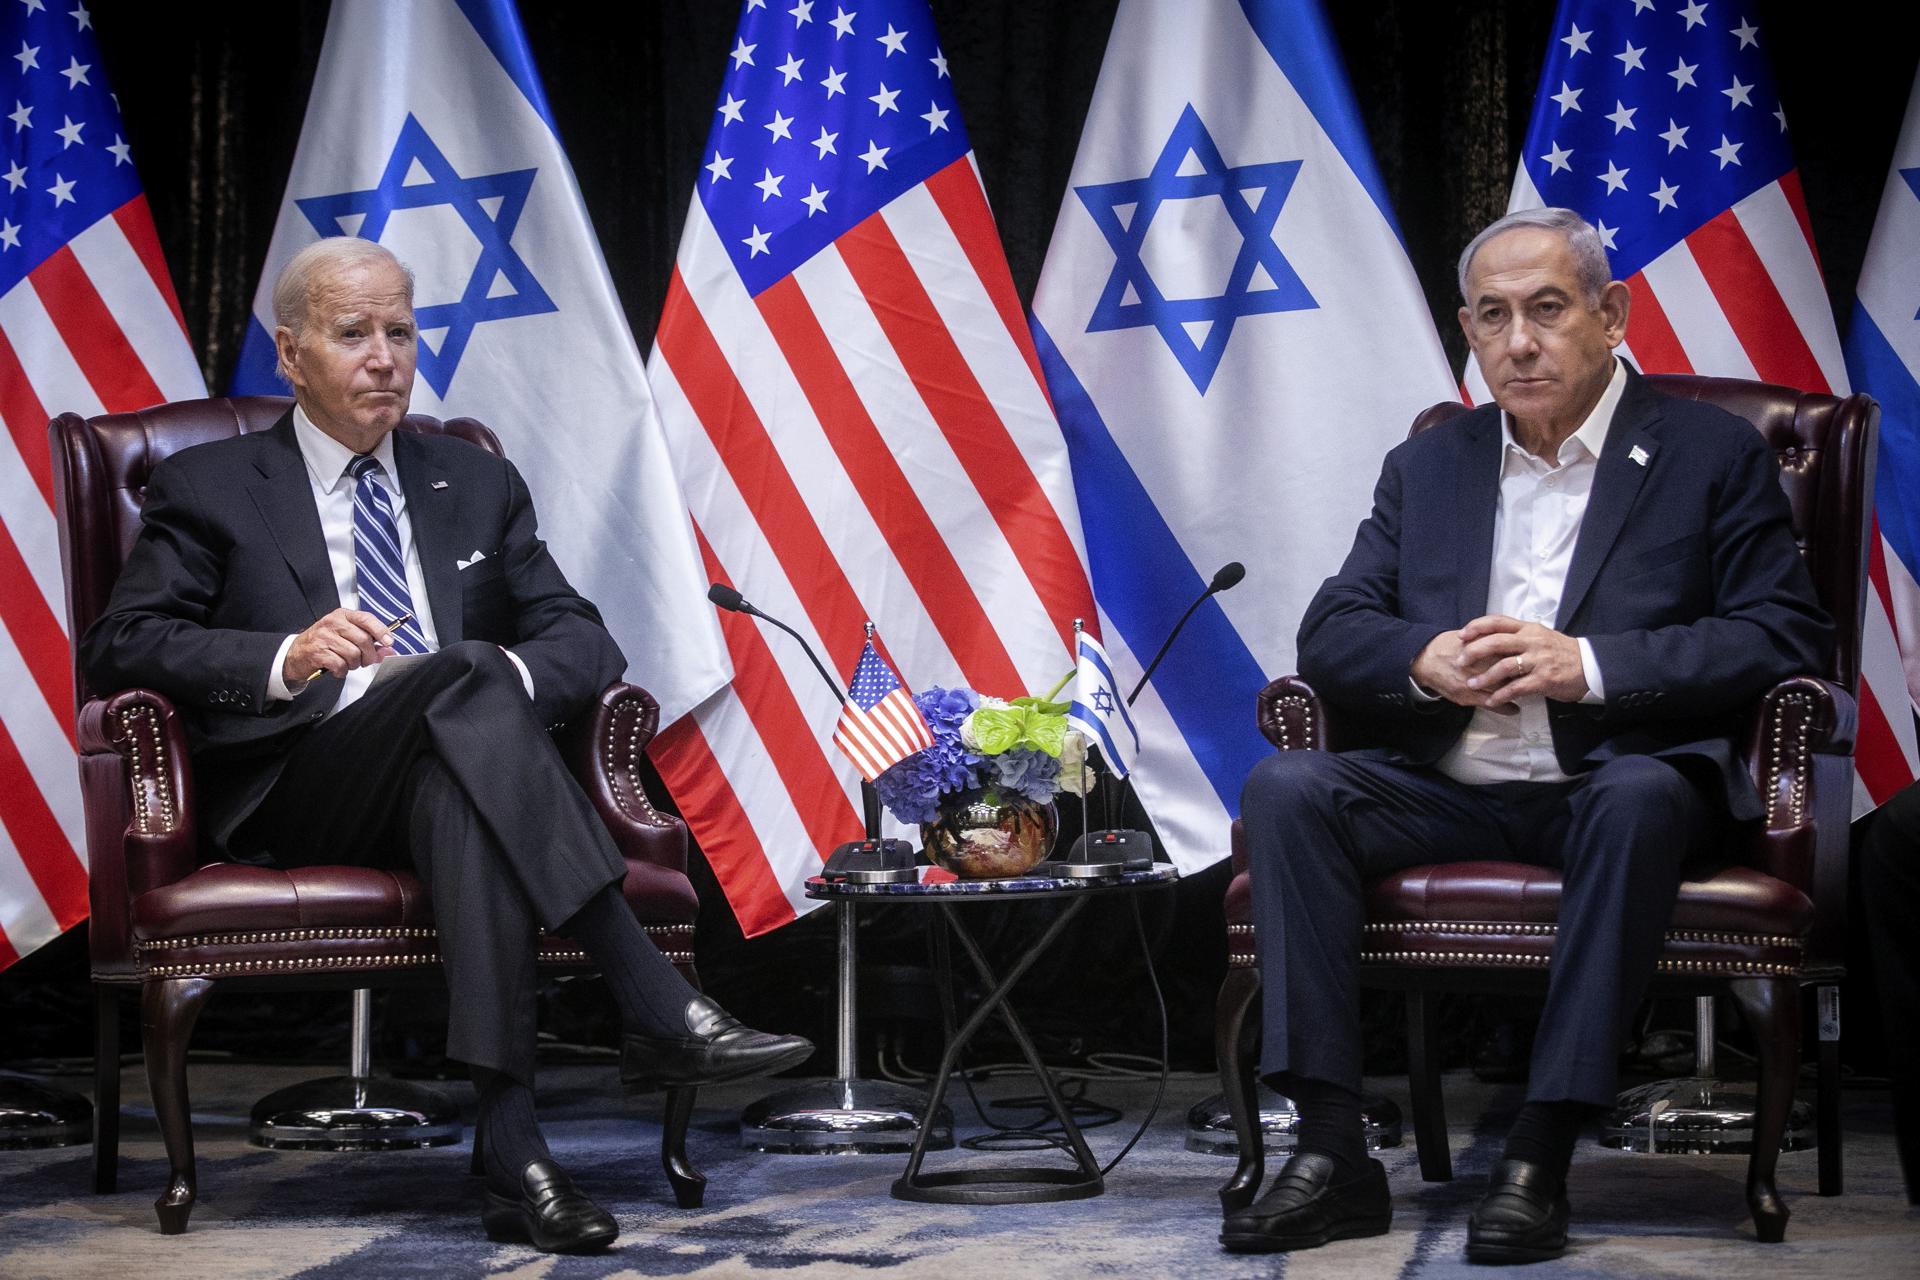 Biden asks Netanyahu to provide security for civilians in Rafah